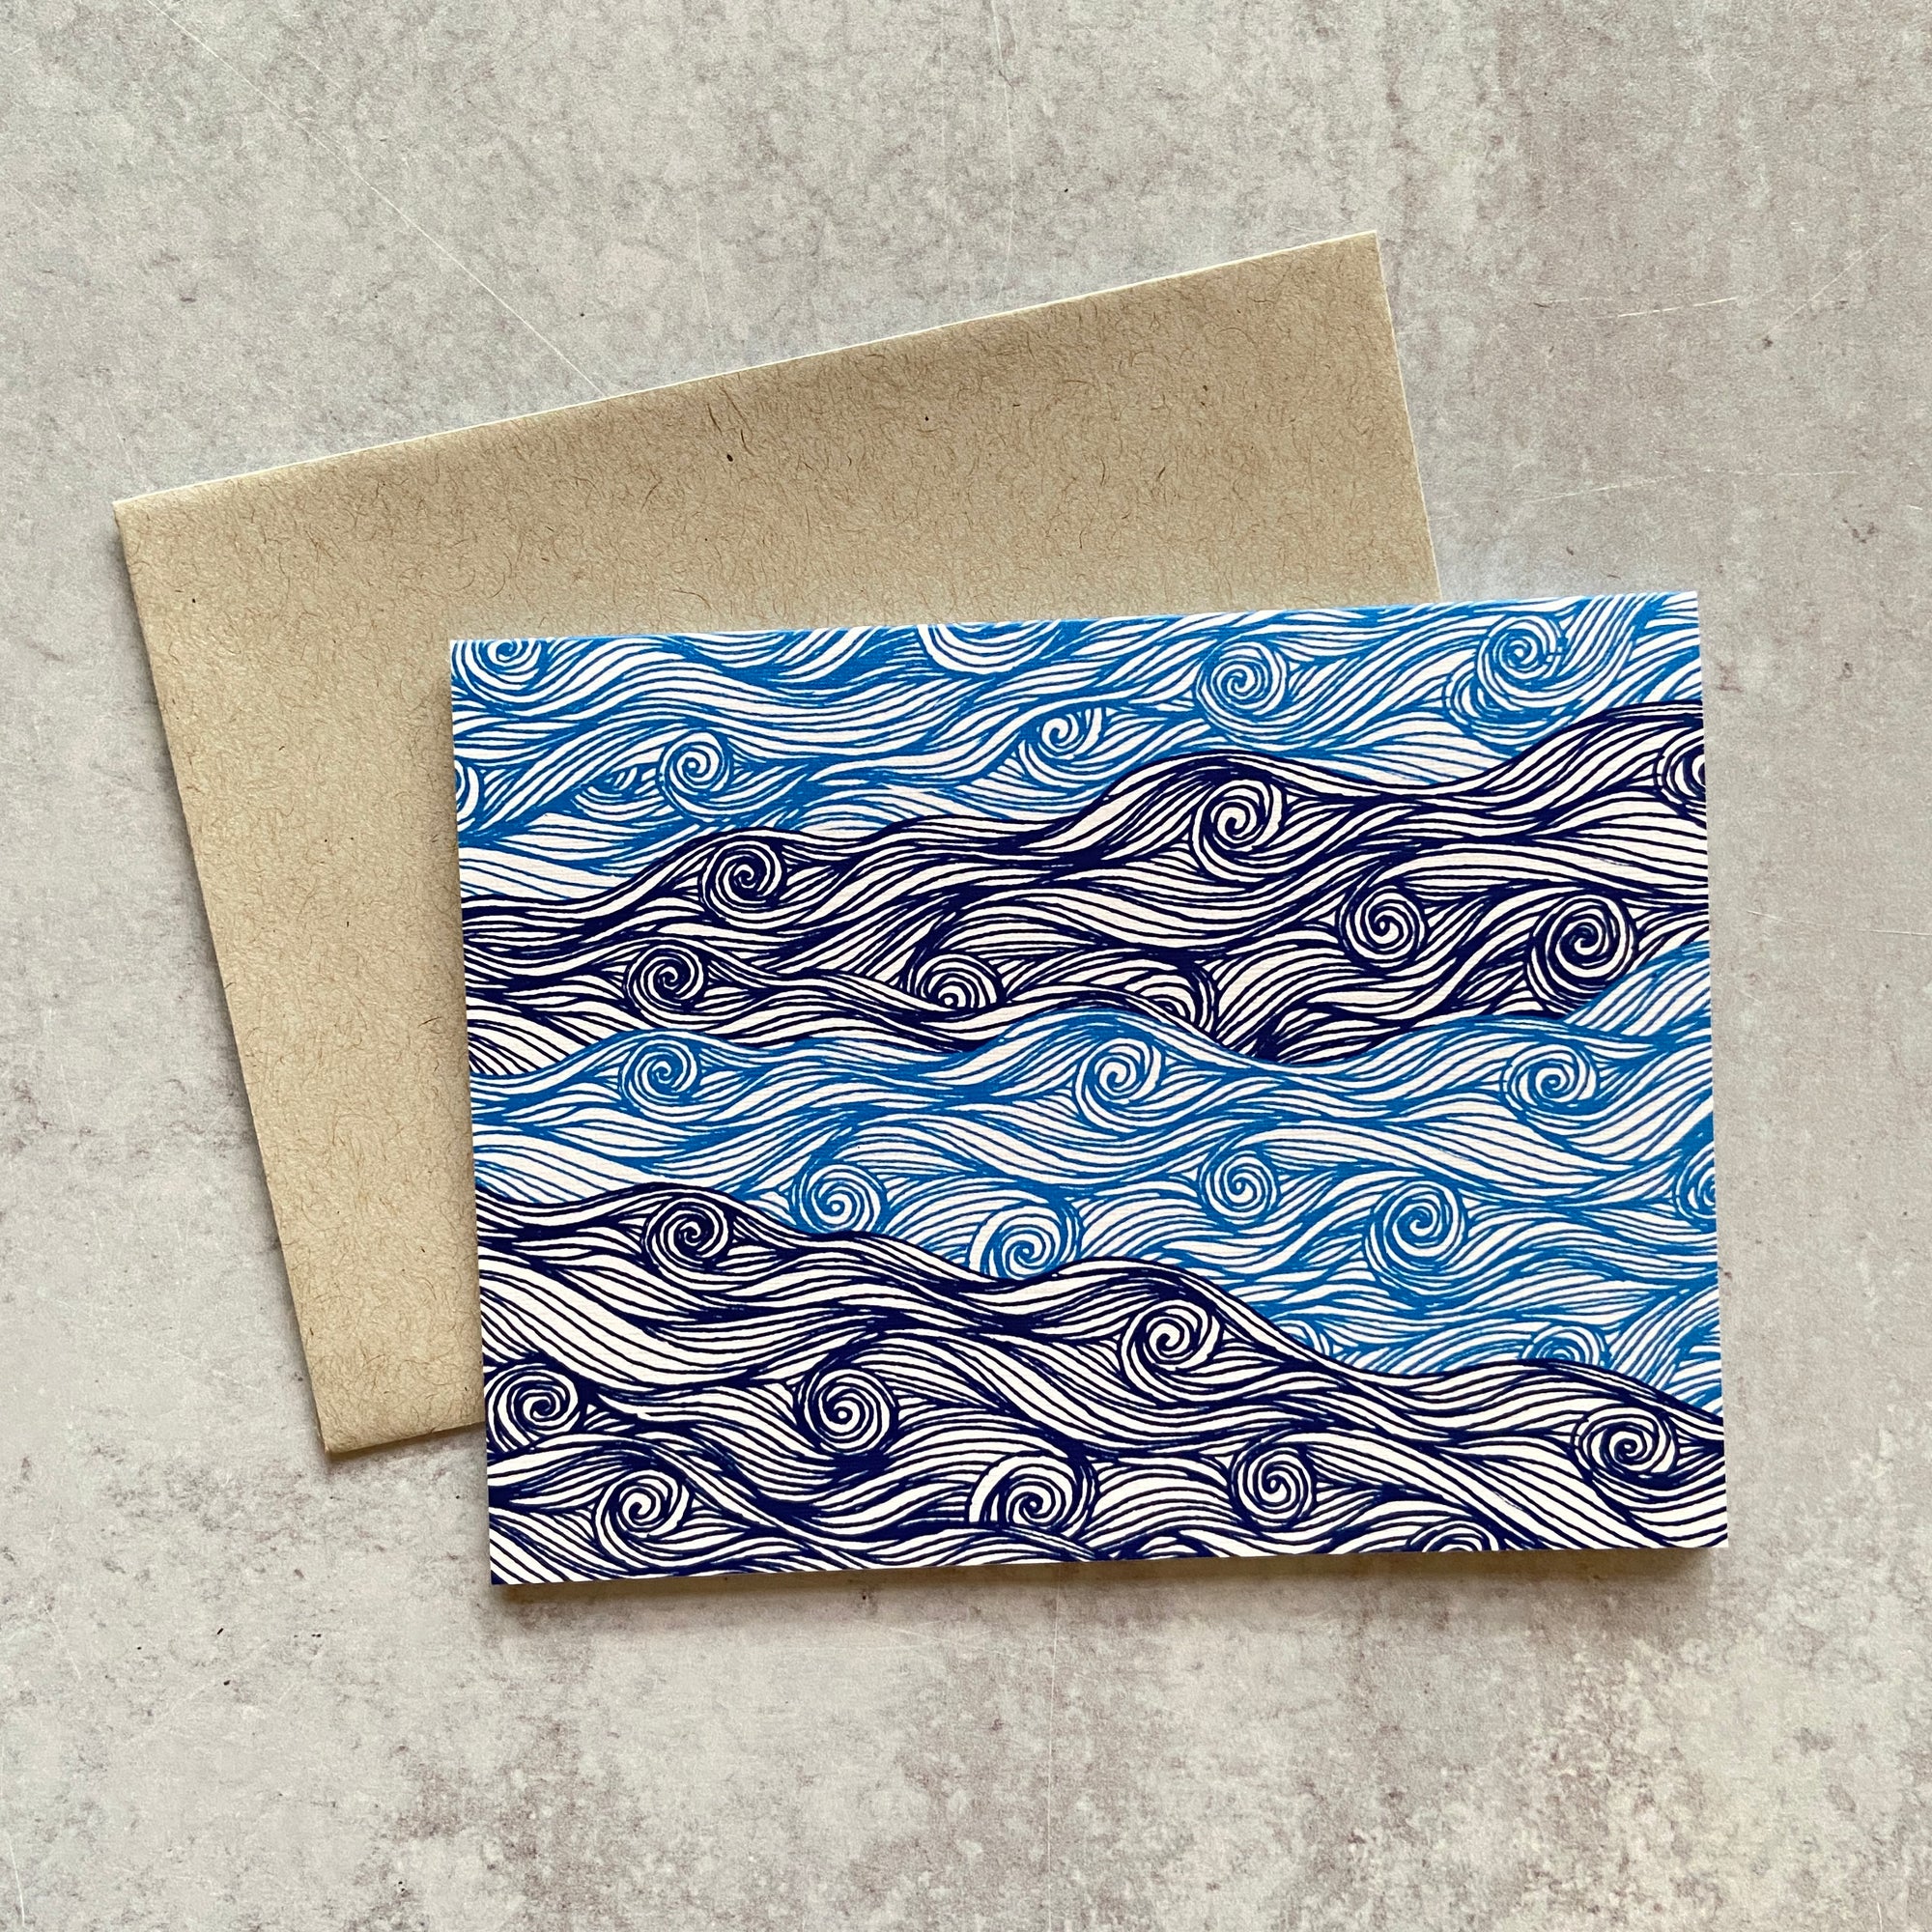 Blue Waves Card